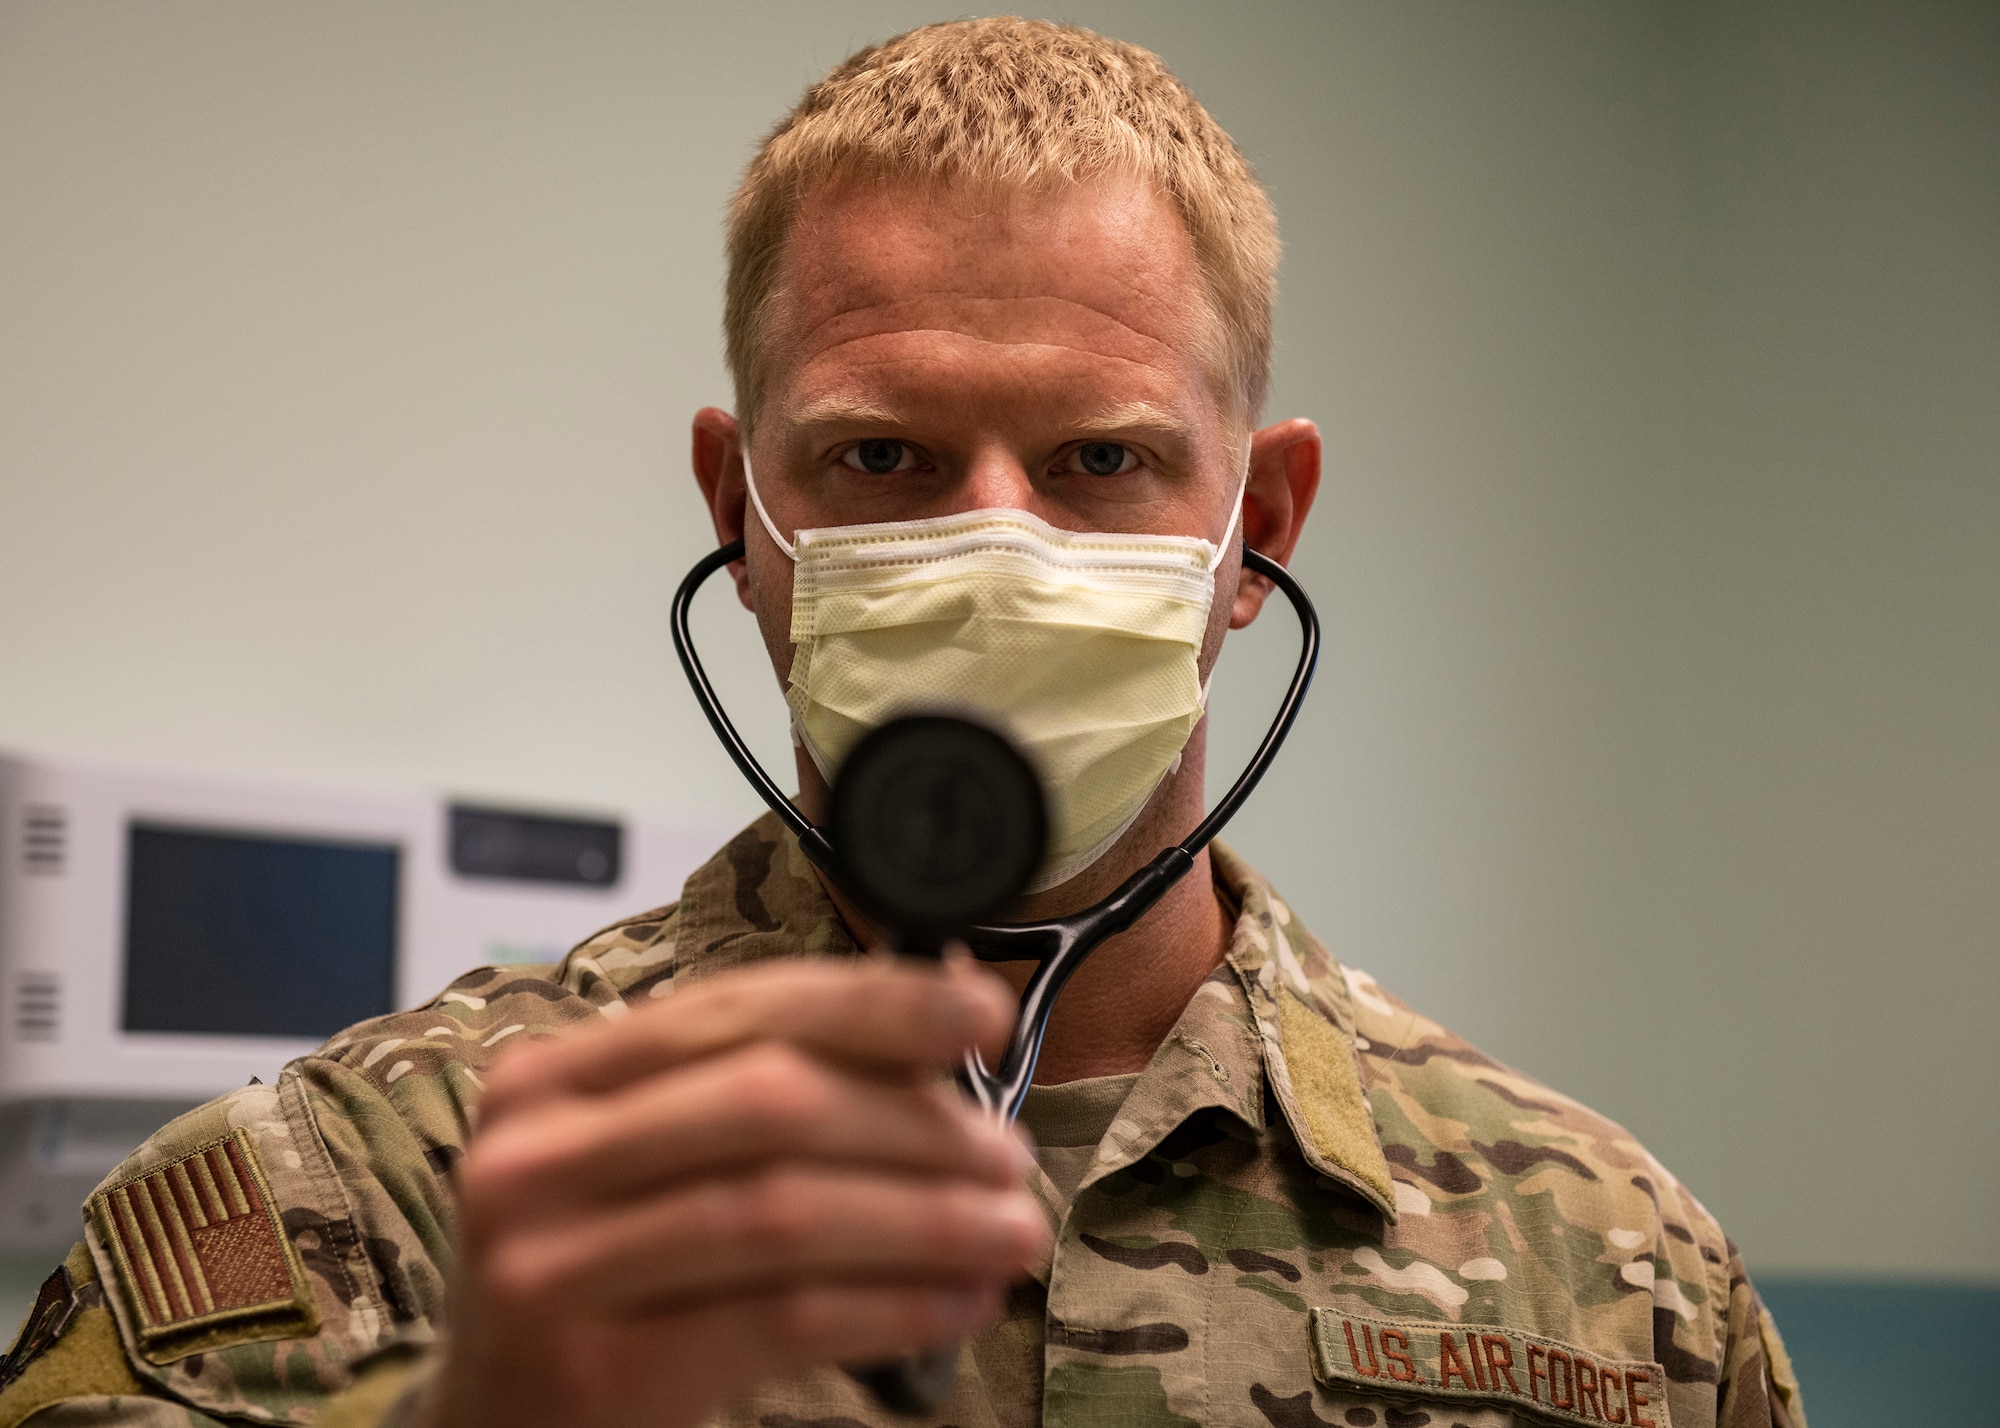 Medical Airman holds stethoscope